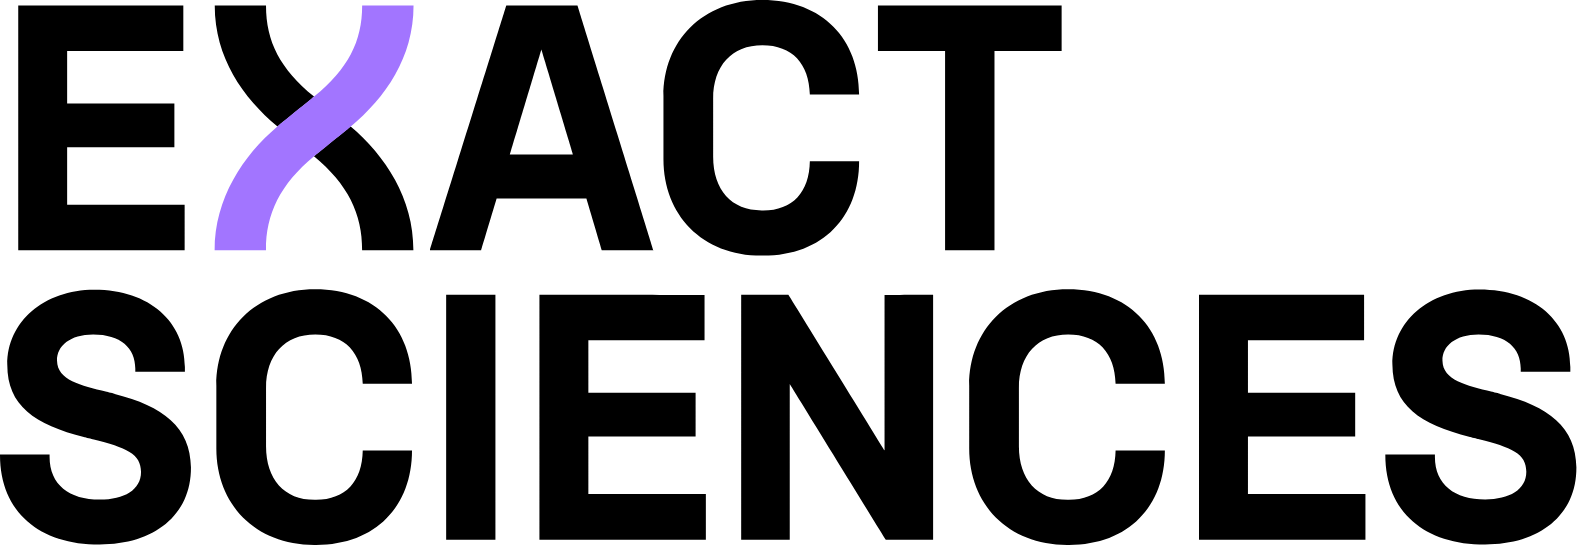 Exact Sciences logo large (transparent PNG)